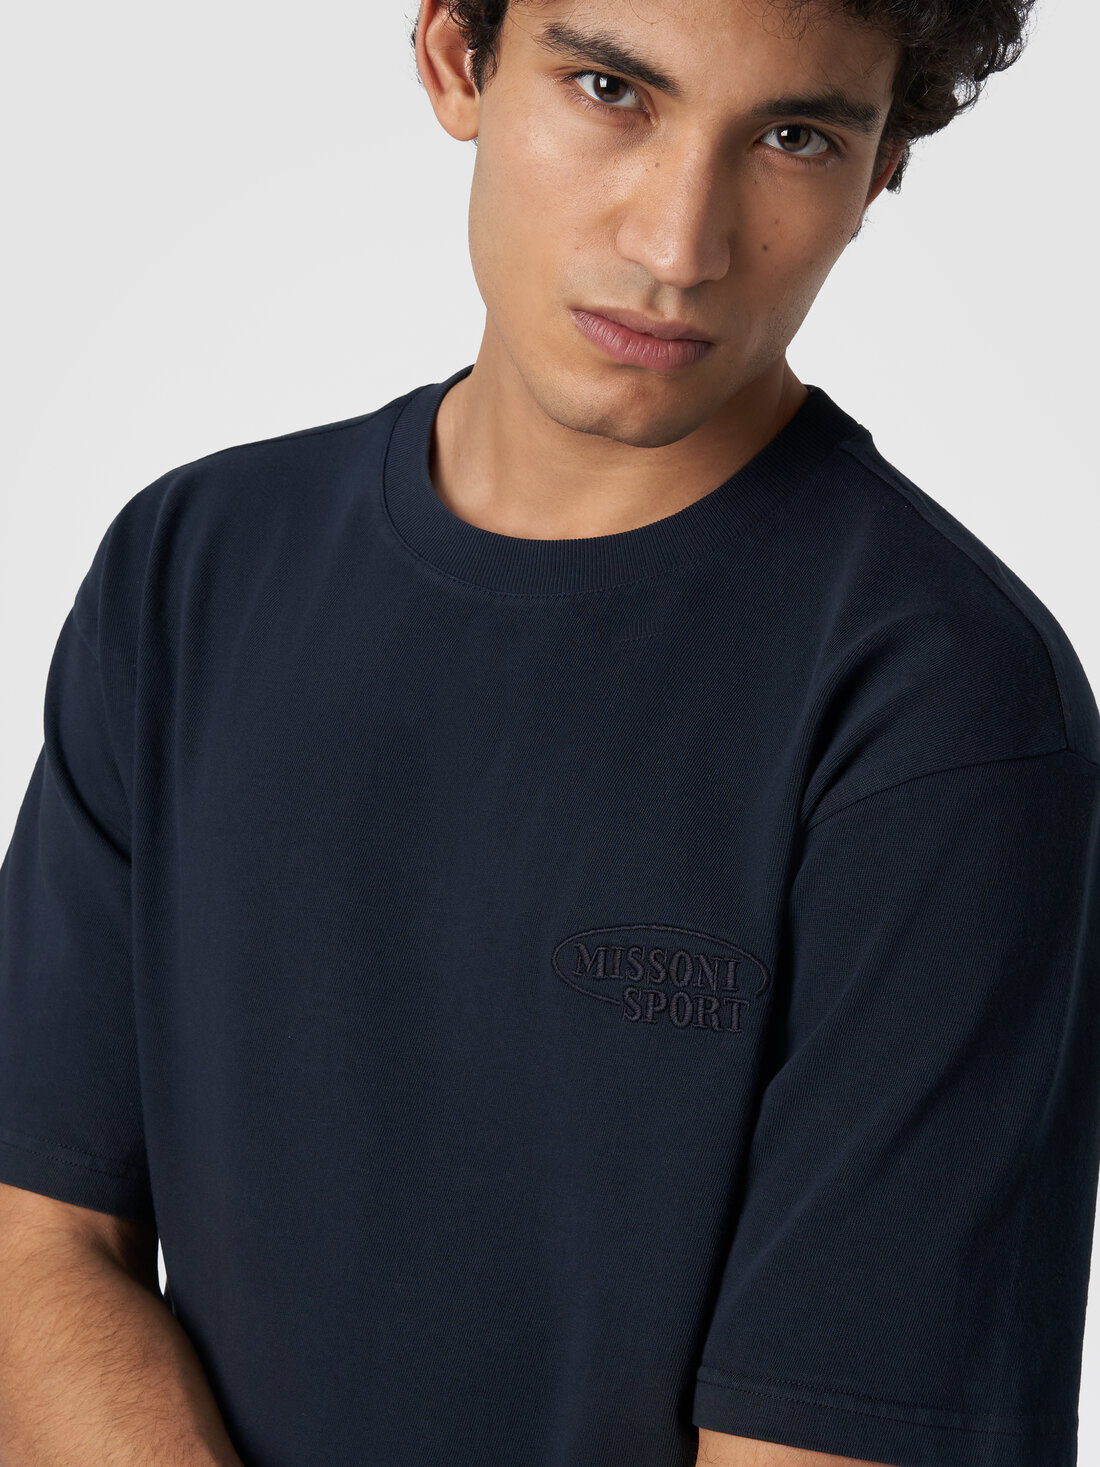 Crew-neck T-shirt in cotton with logo, Navy Blue  - TS24SL00BJ00GYS72EU - 4